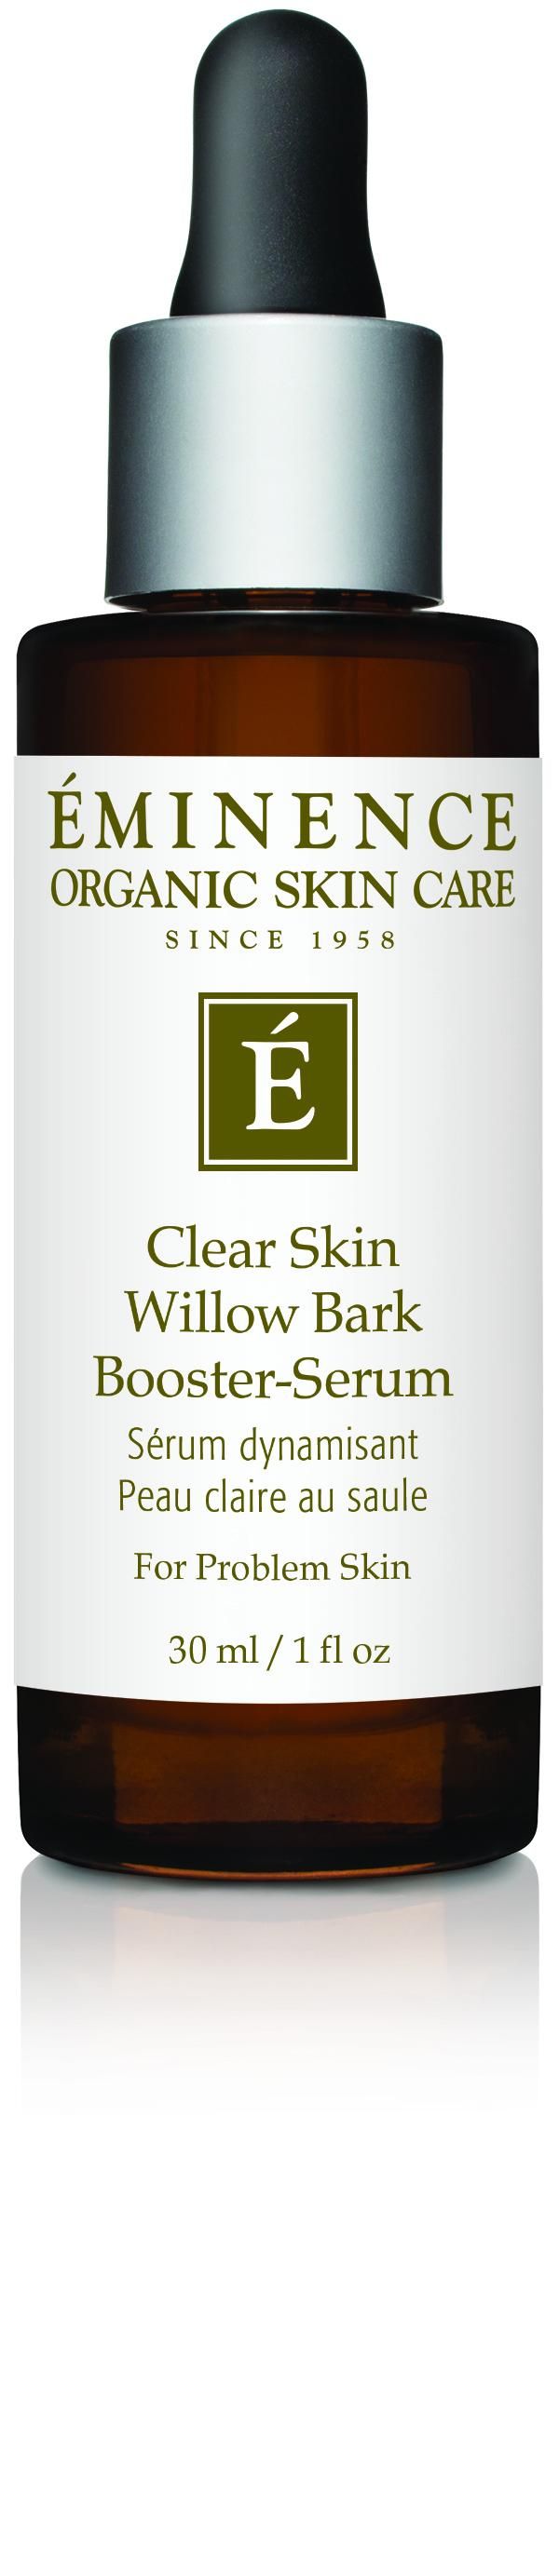 Eminence Clear Skin Willow Bark Booster-Serum